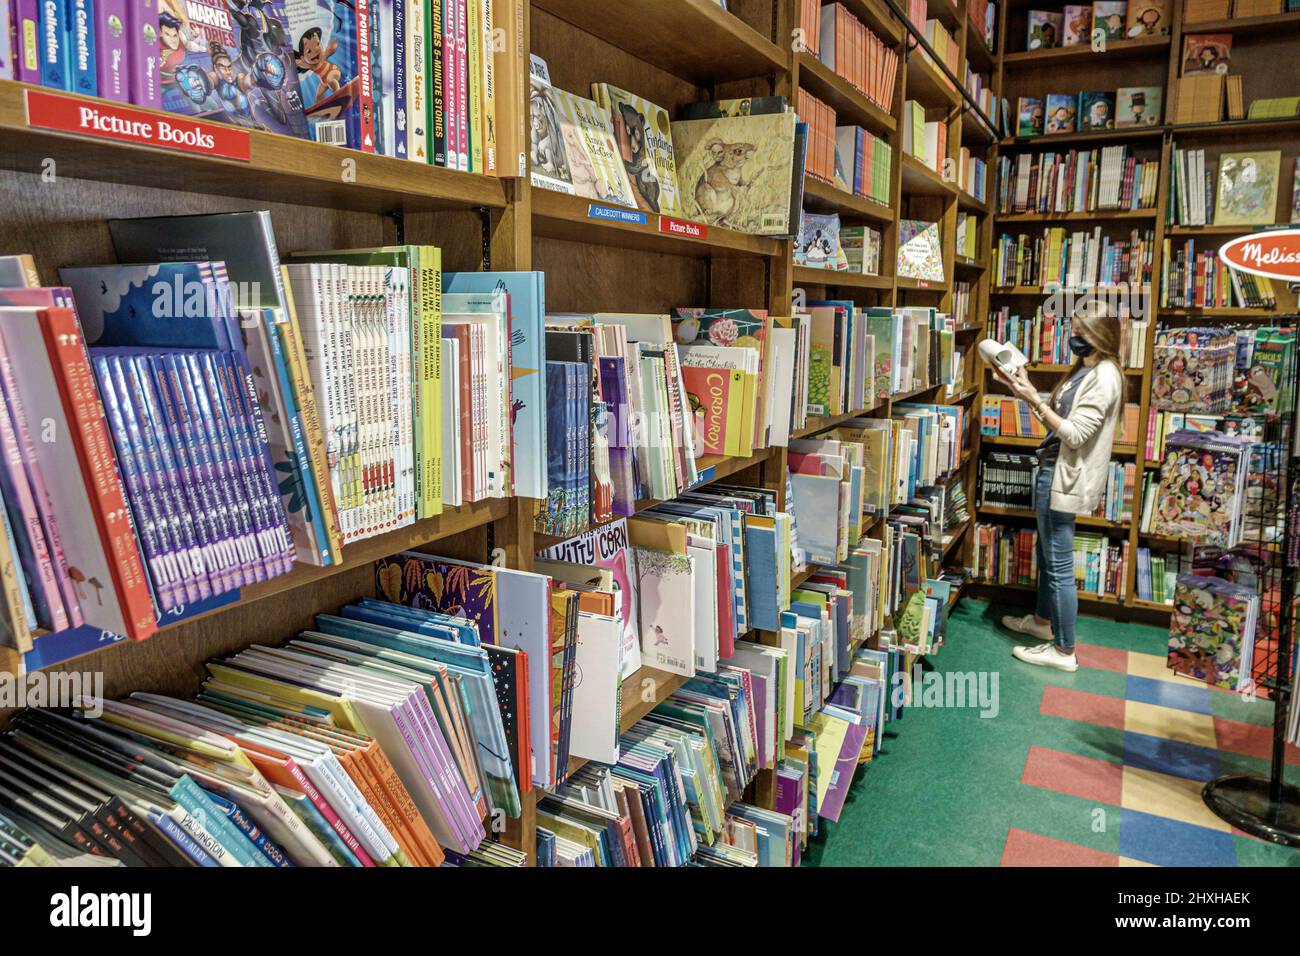 Coral Gables Florida Miami Books & Books bookstore inside interior bookshelf shelves Stock Photo